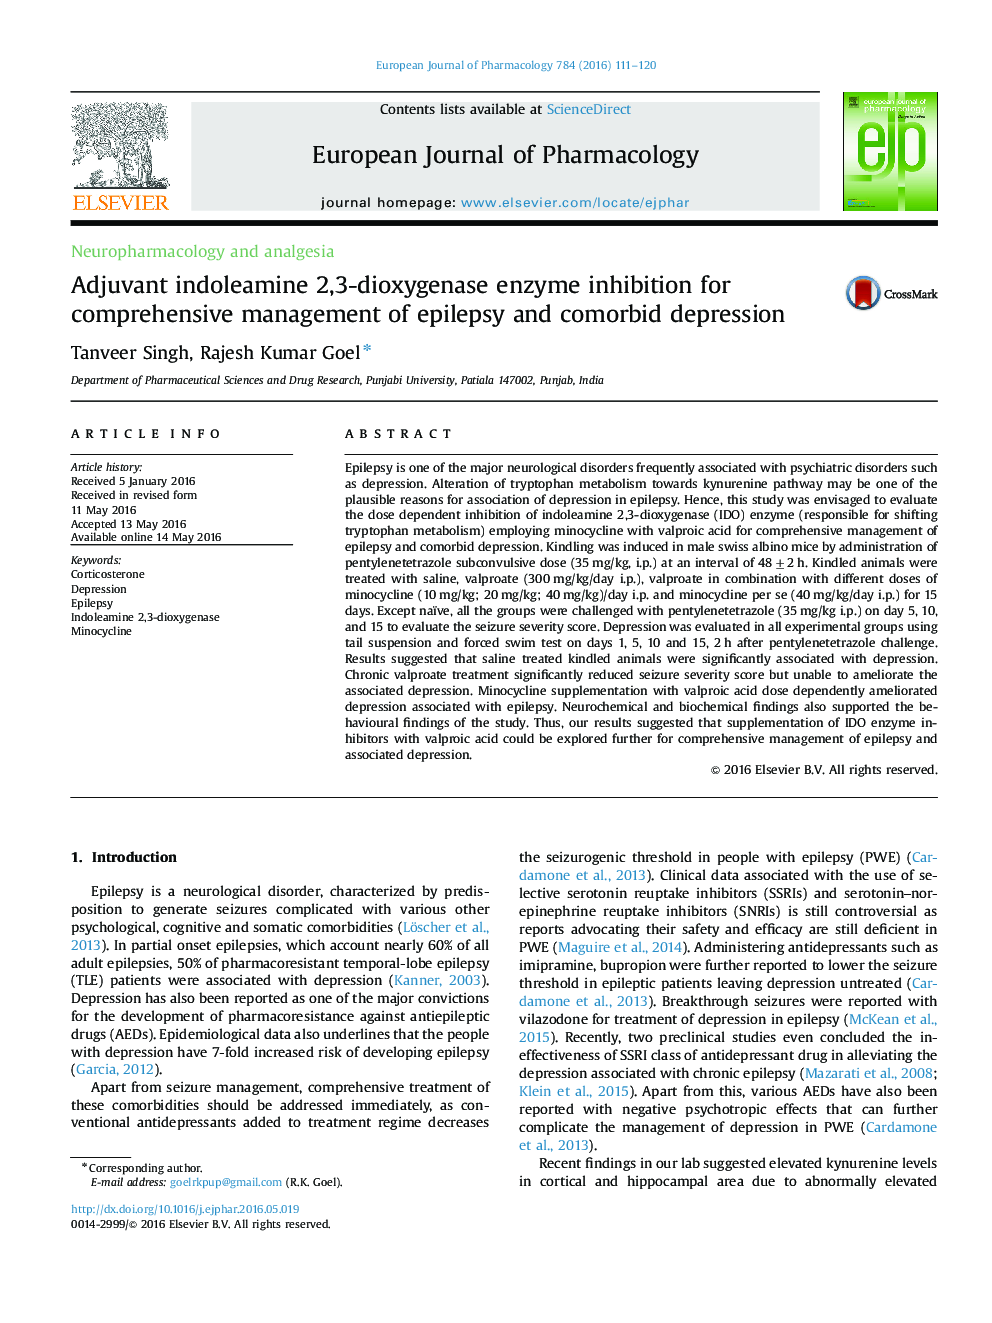 Adjuvant indoleamine 2,3-dioxygenase enzyme inhibition for comprehensive management of epilepsy and comorbid depression